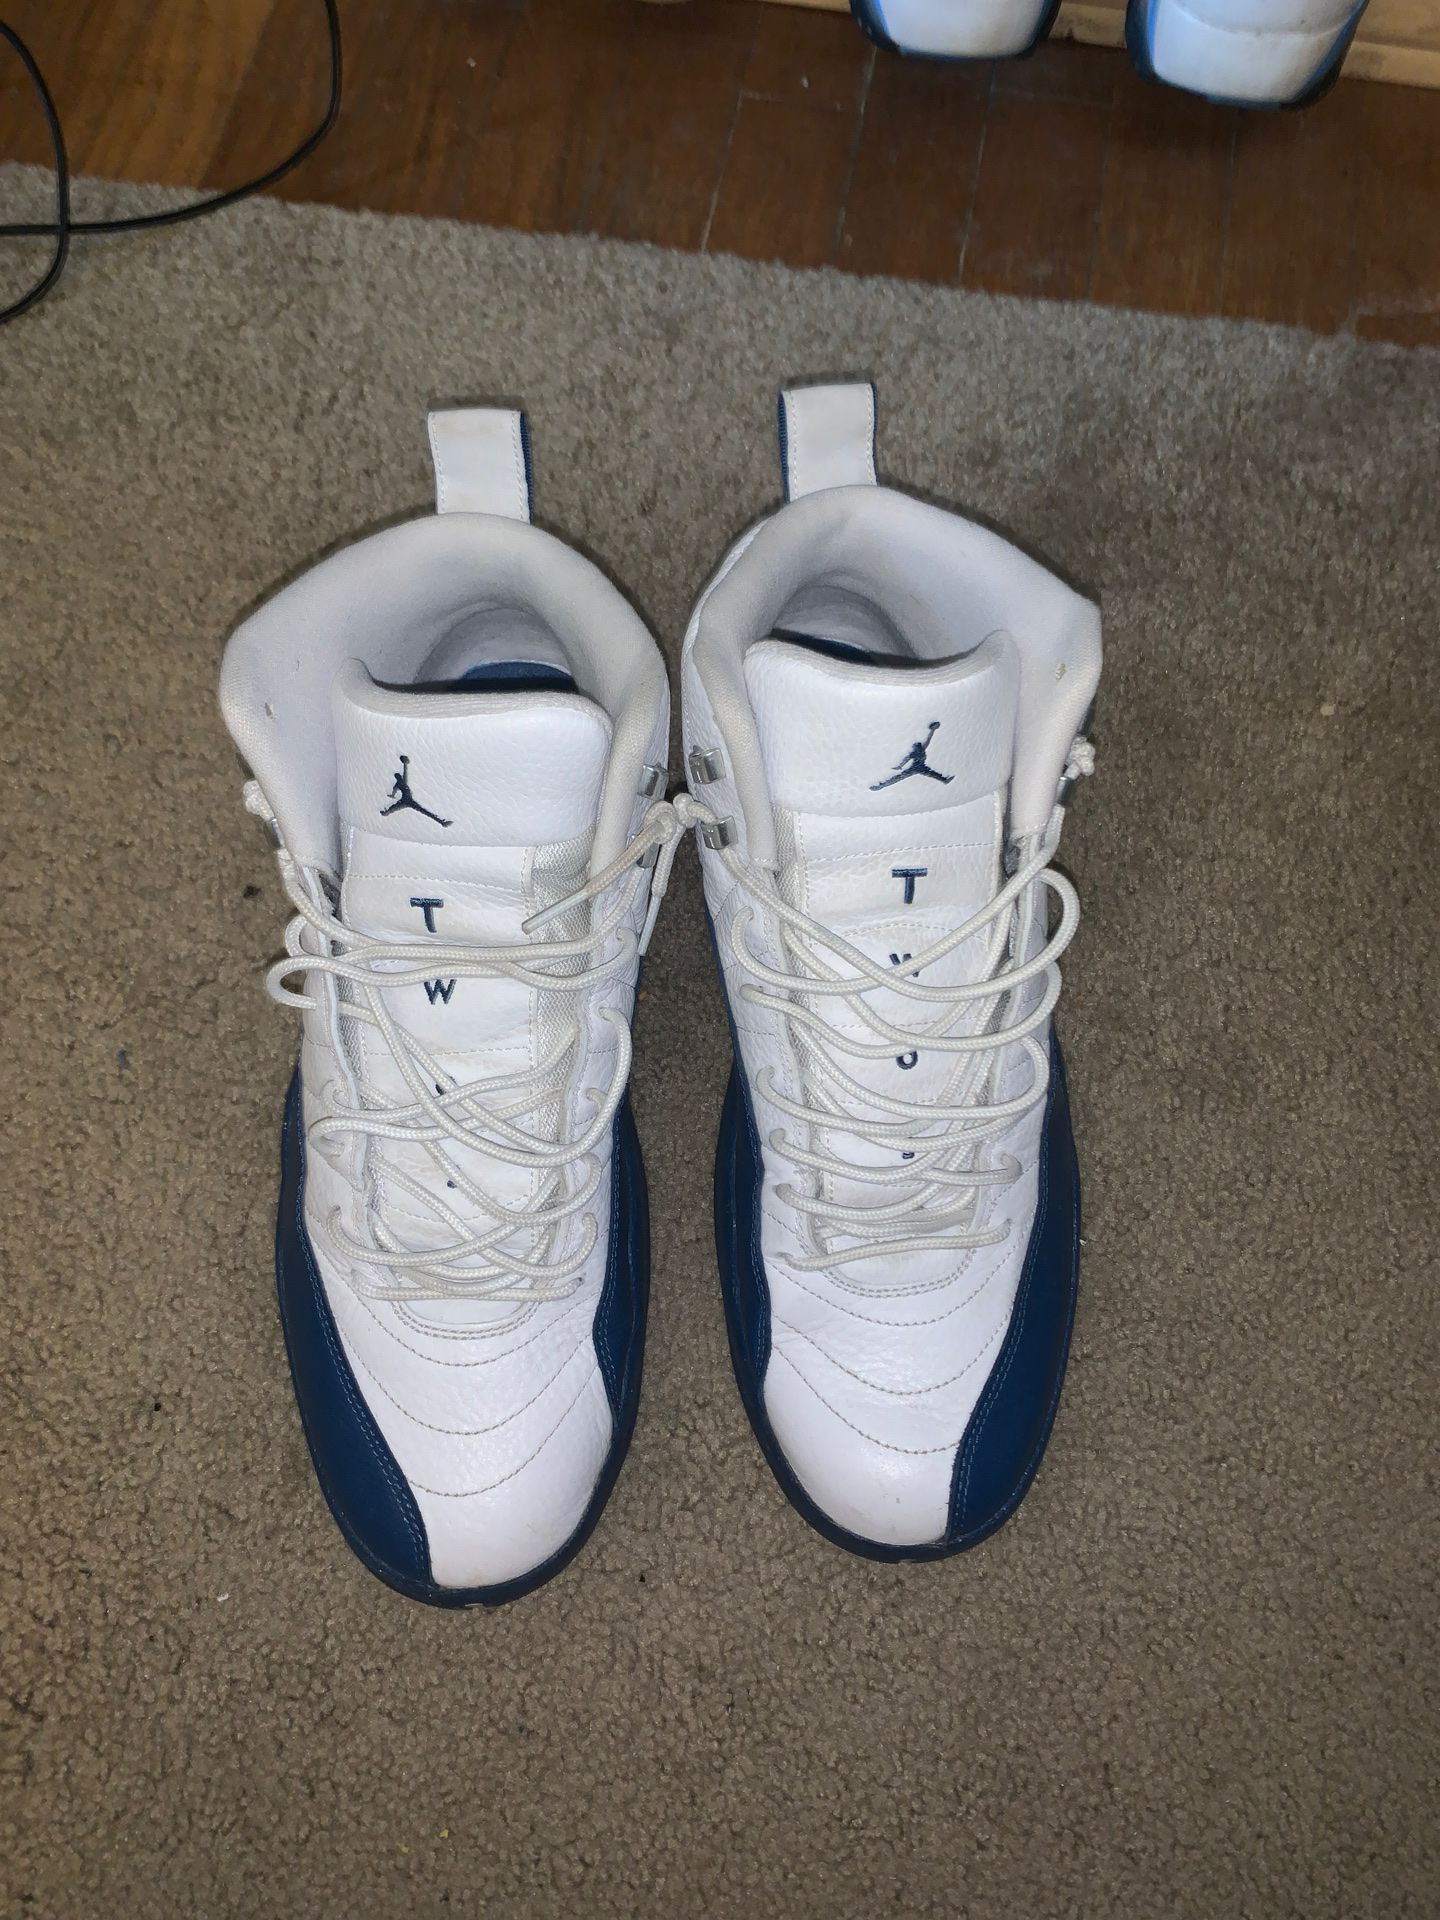 French blue Jordan 12s